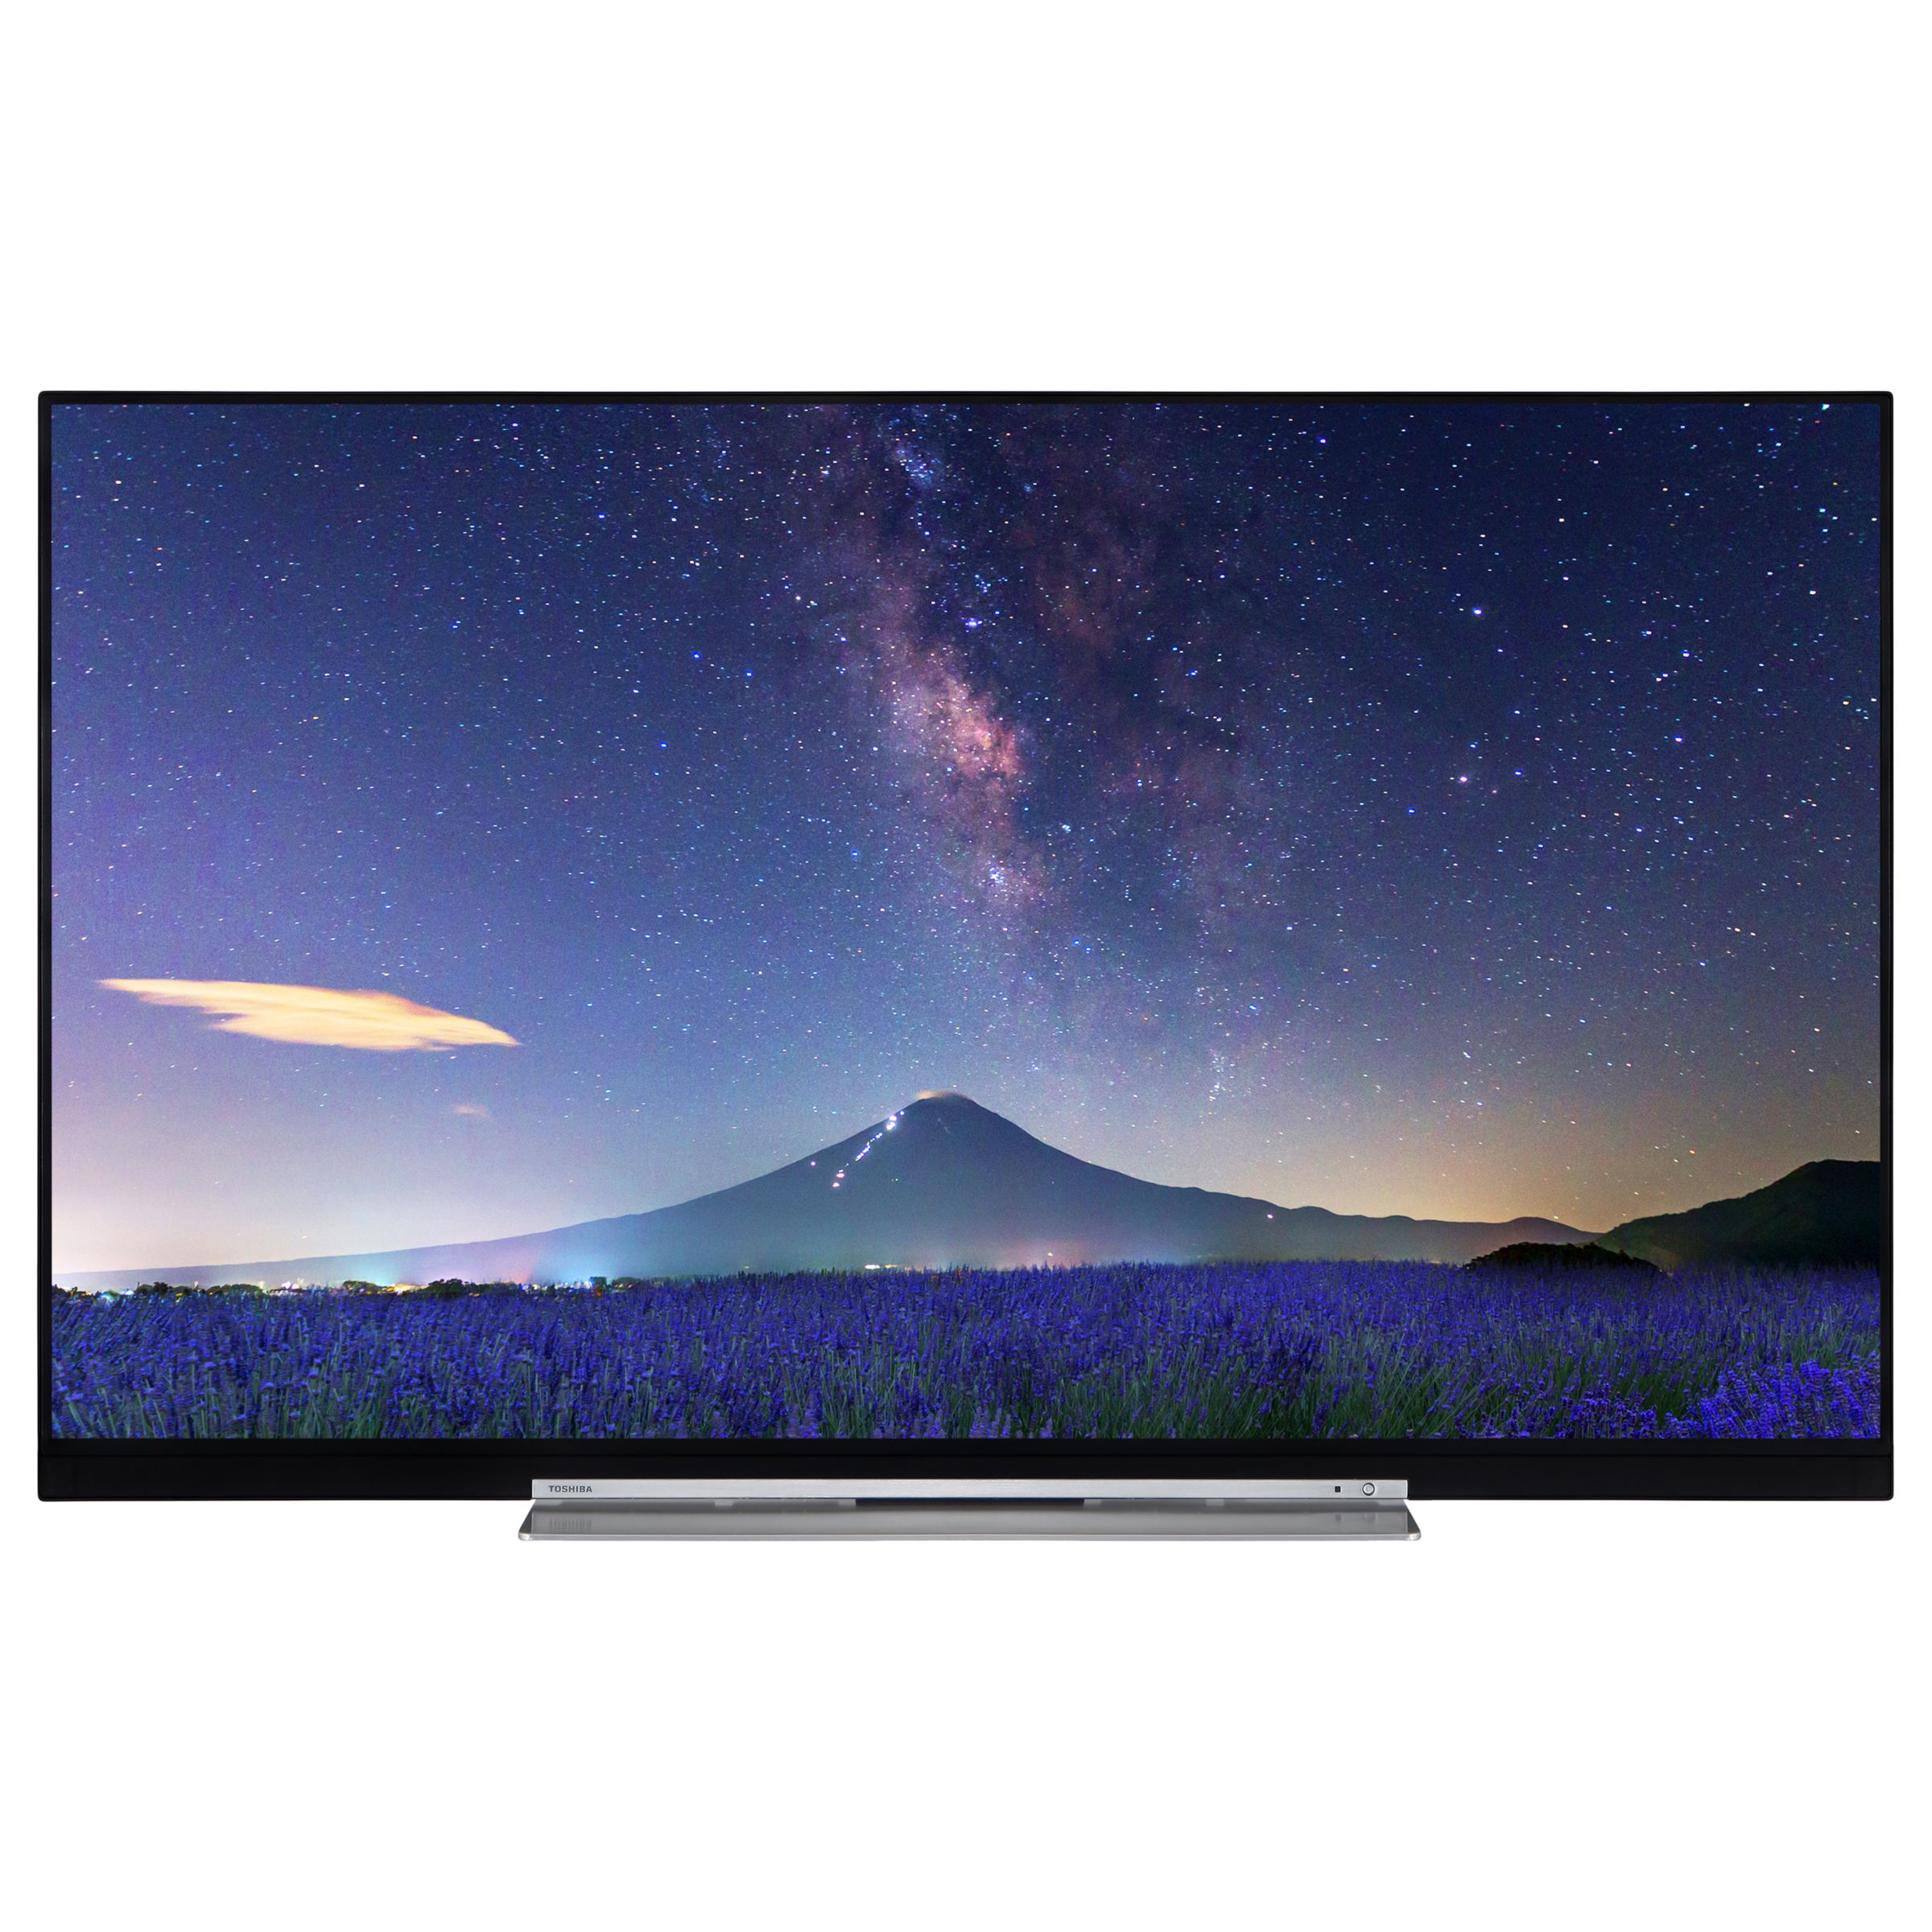 Toshiba 49U7763DB LED 4K Ultra HD Smart TV Review